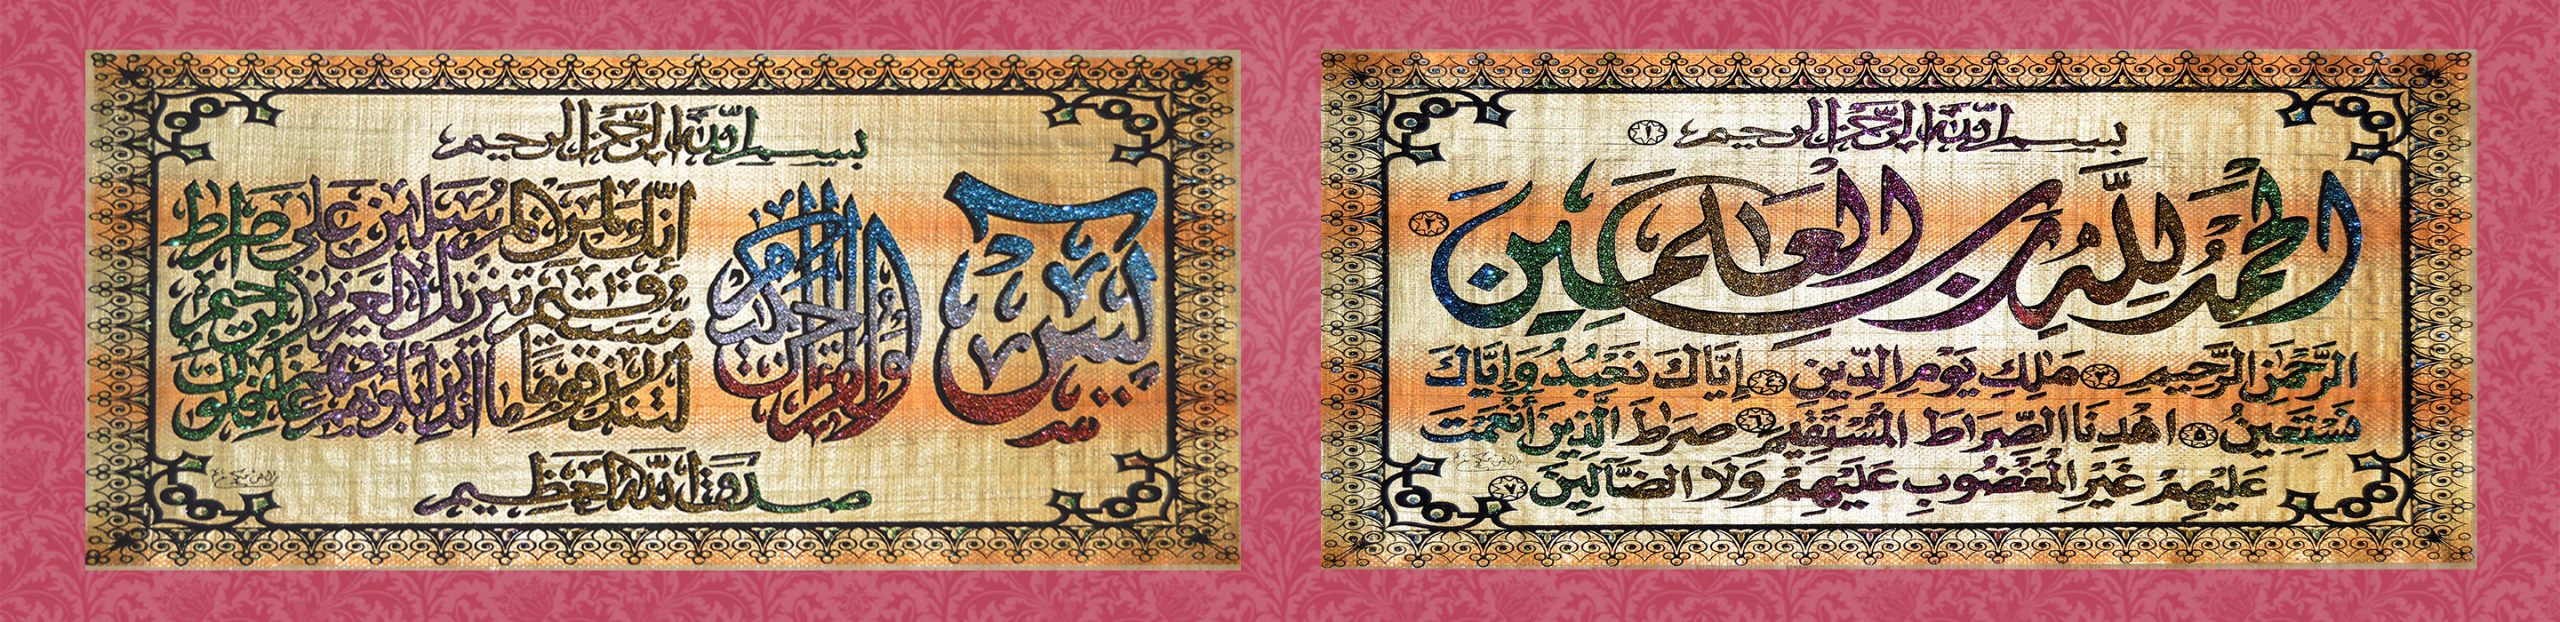 zahnsaahad islamic crafts